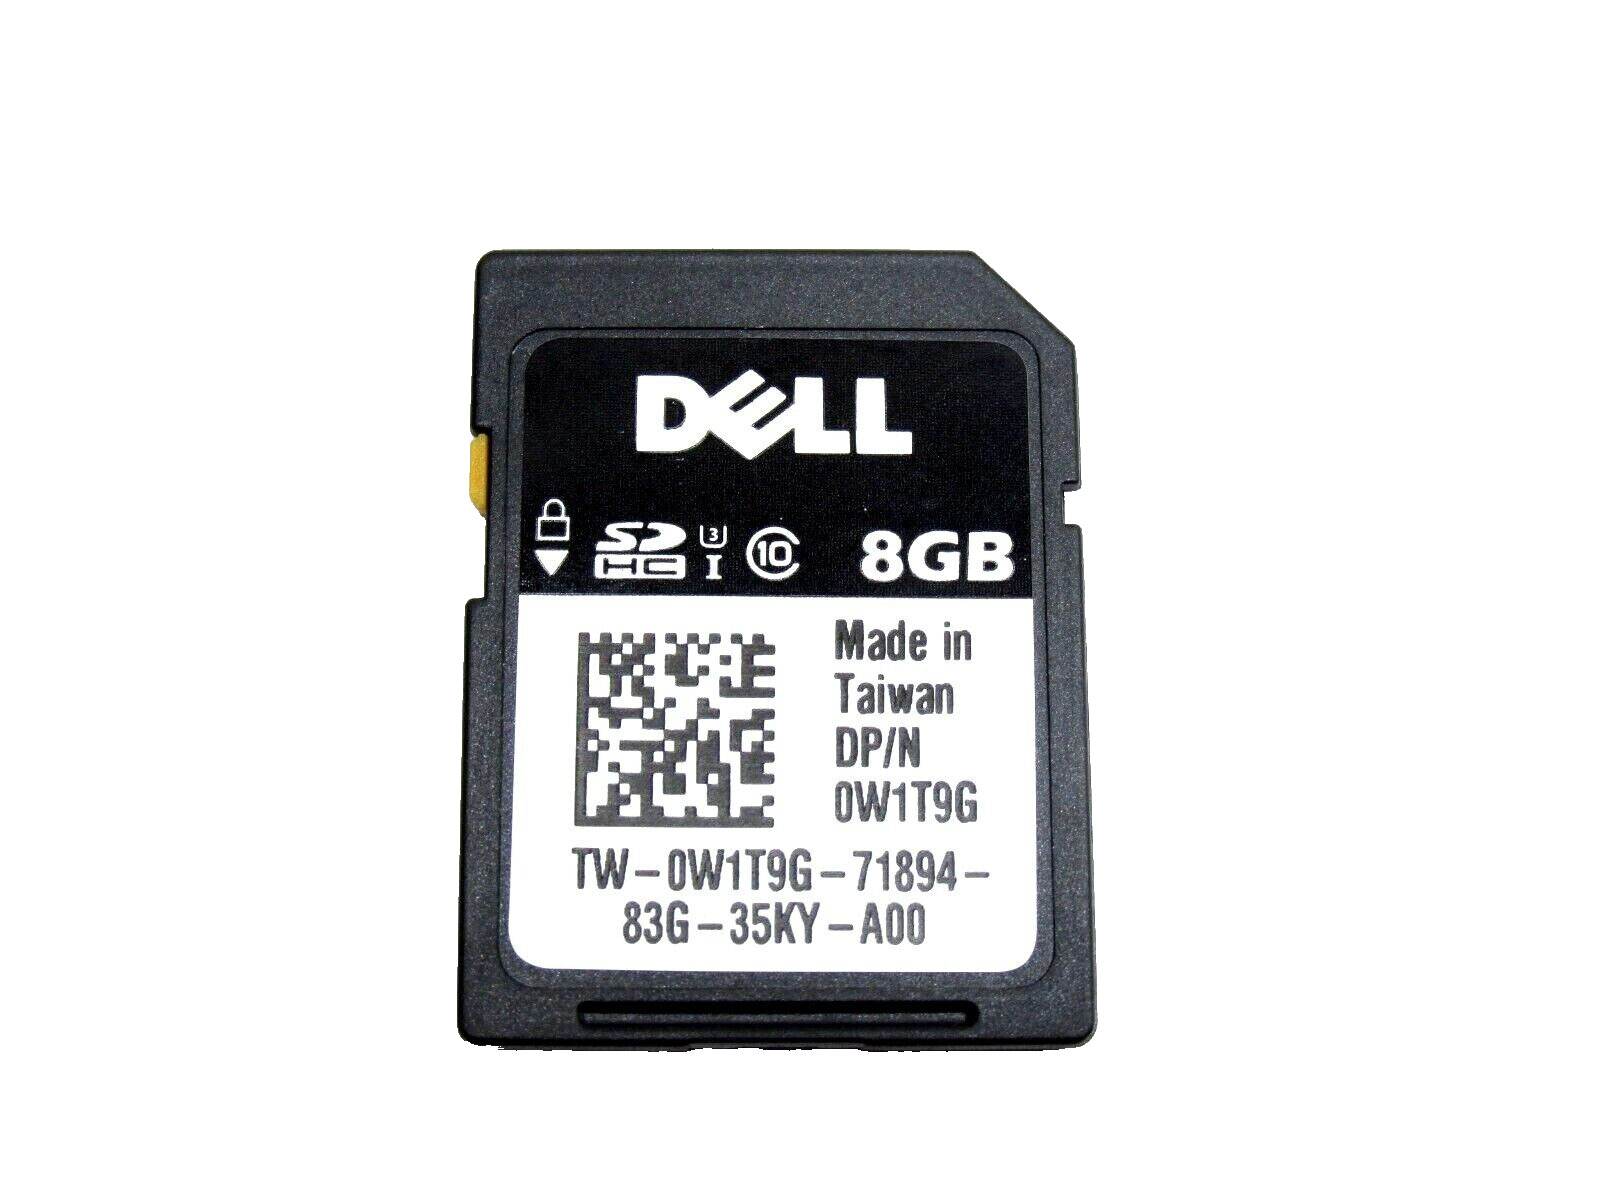 Dell 626K1 8GB iDRAC vFlash SD Card